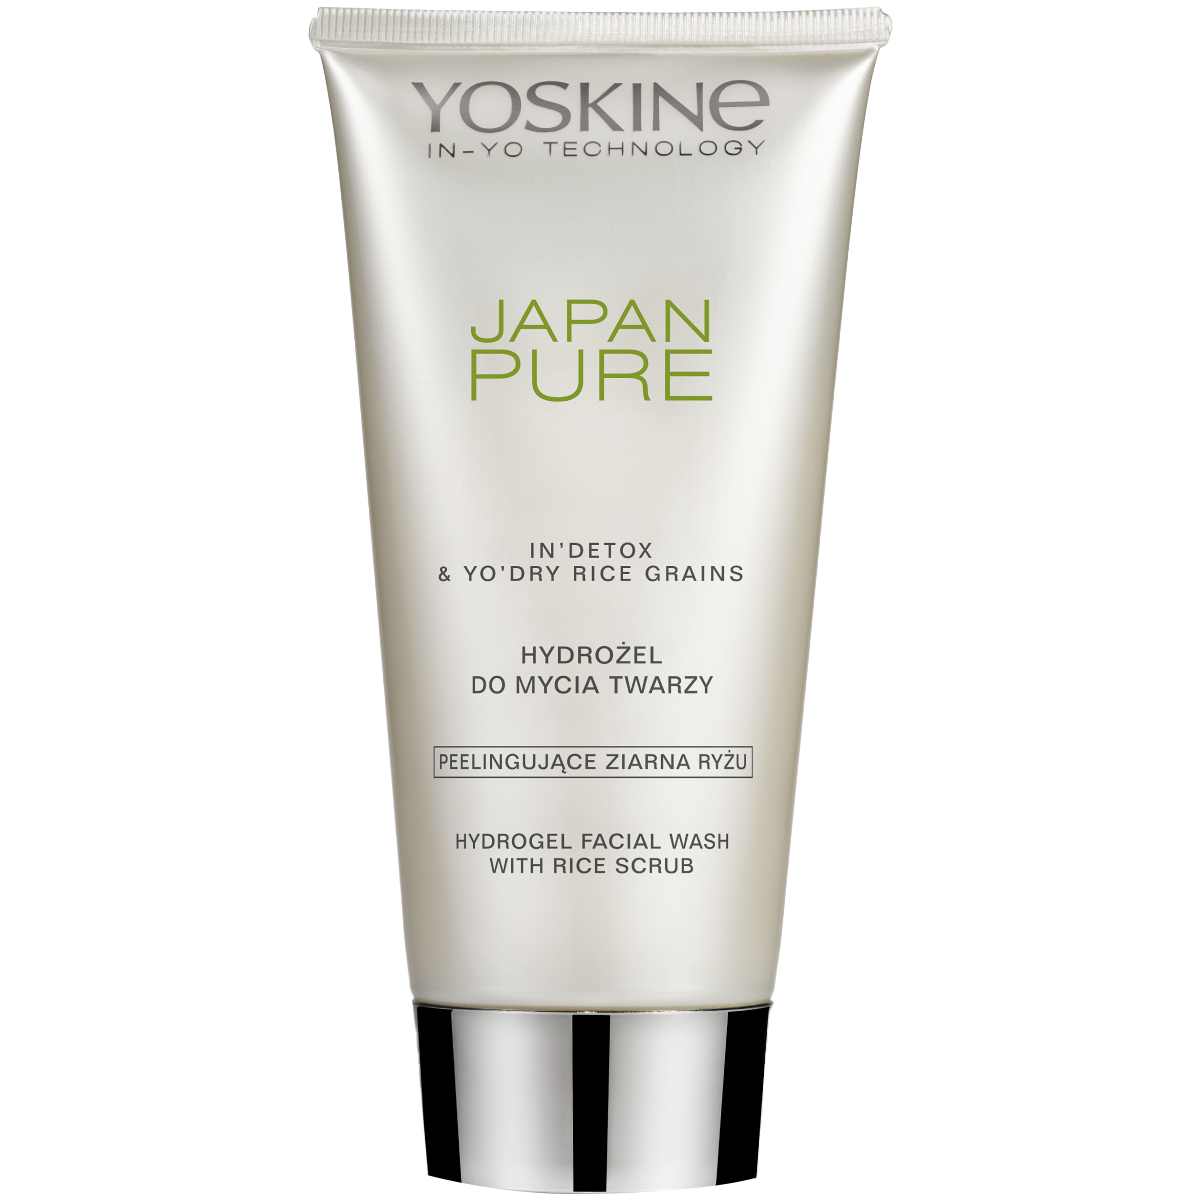 Yoskine Japan Pure гидрогель для лица, 150 мл yoskine japan pure скраб для лица 75 мл